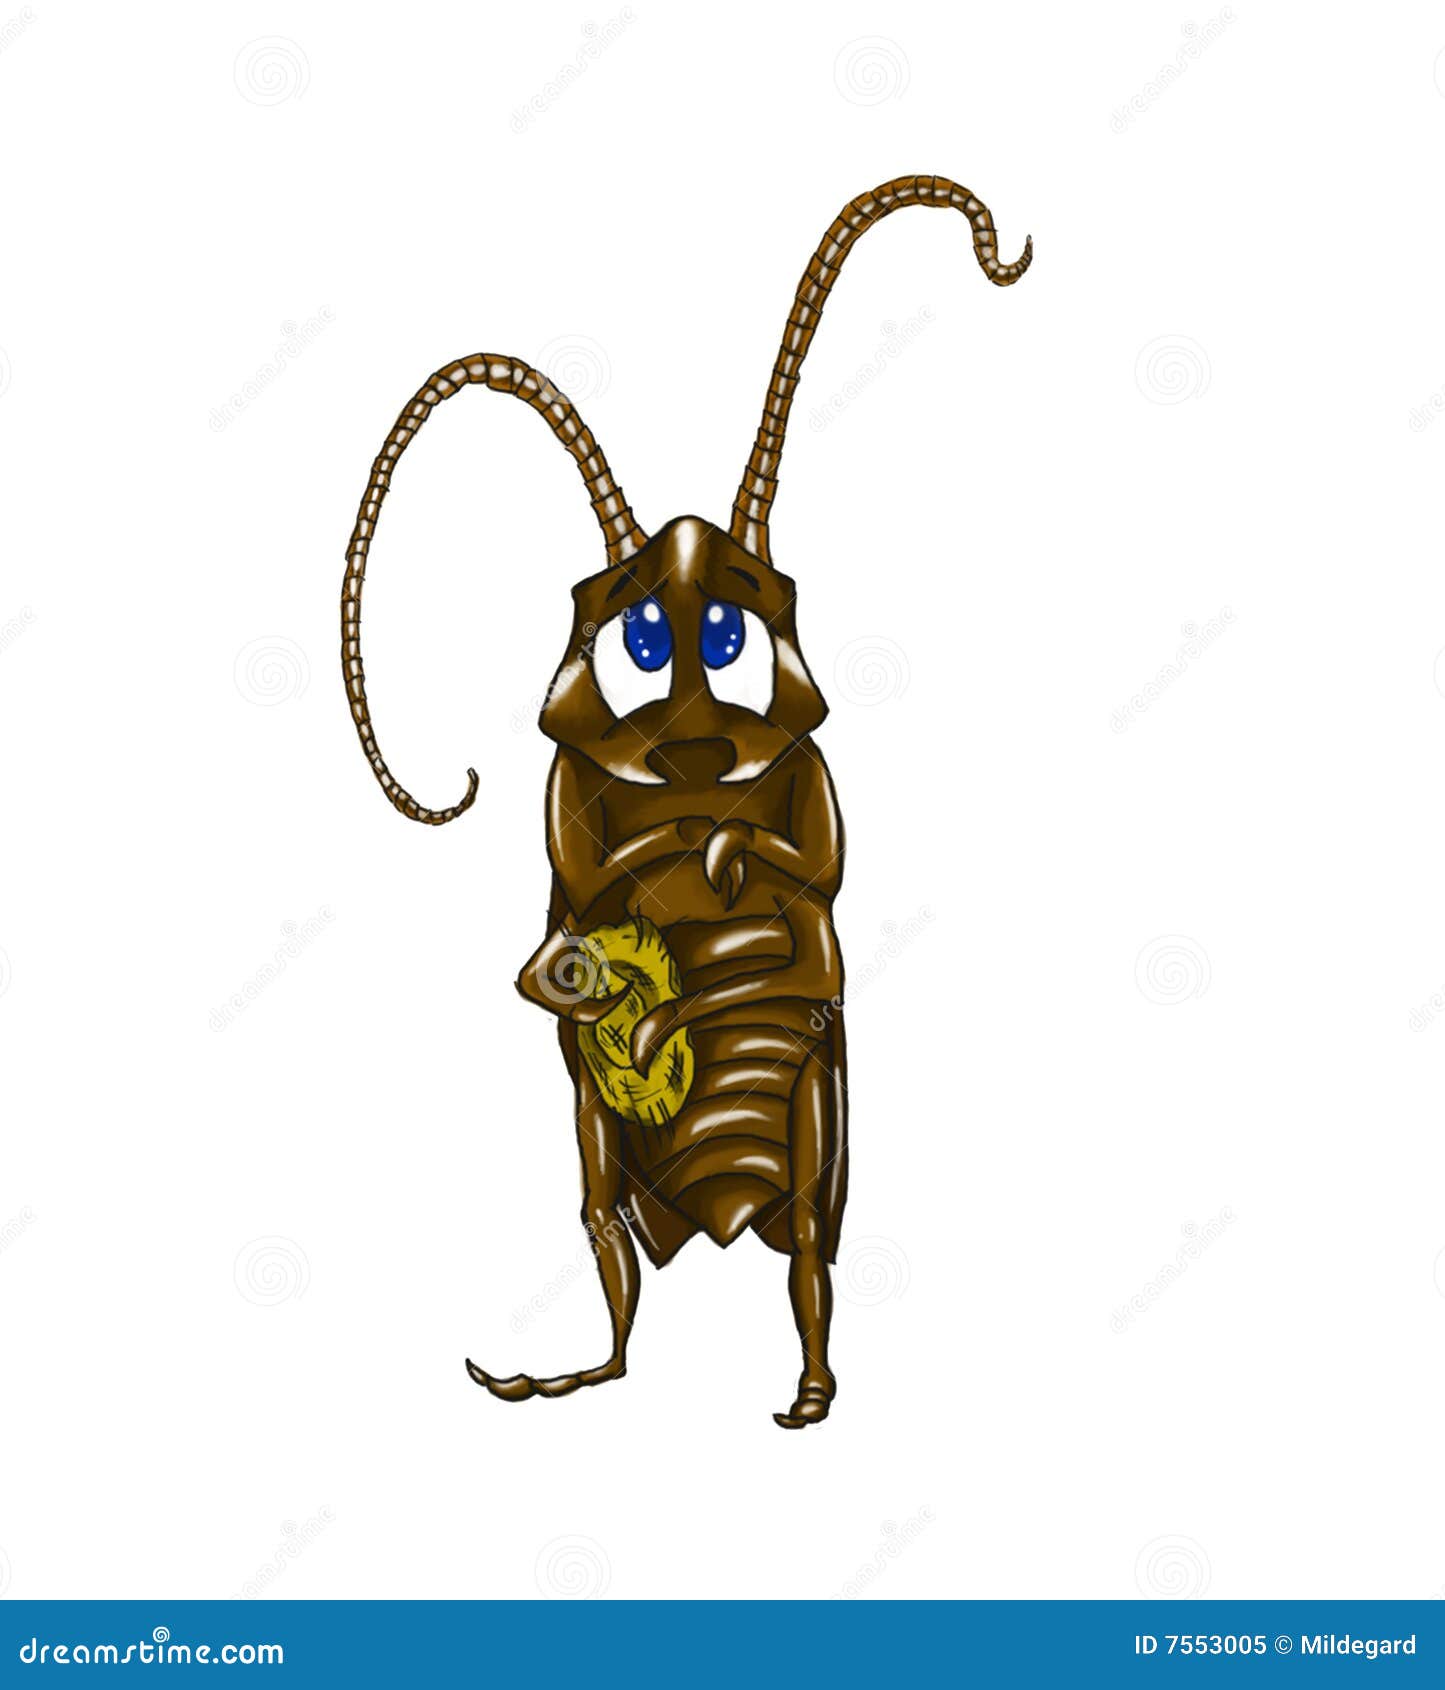 Cartoon cockroach stock illustration. Illustration of drawn - 7553005